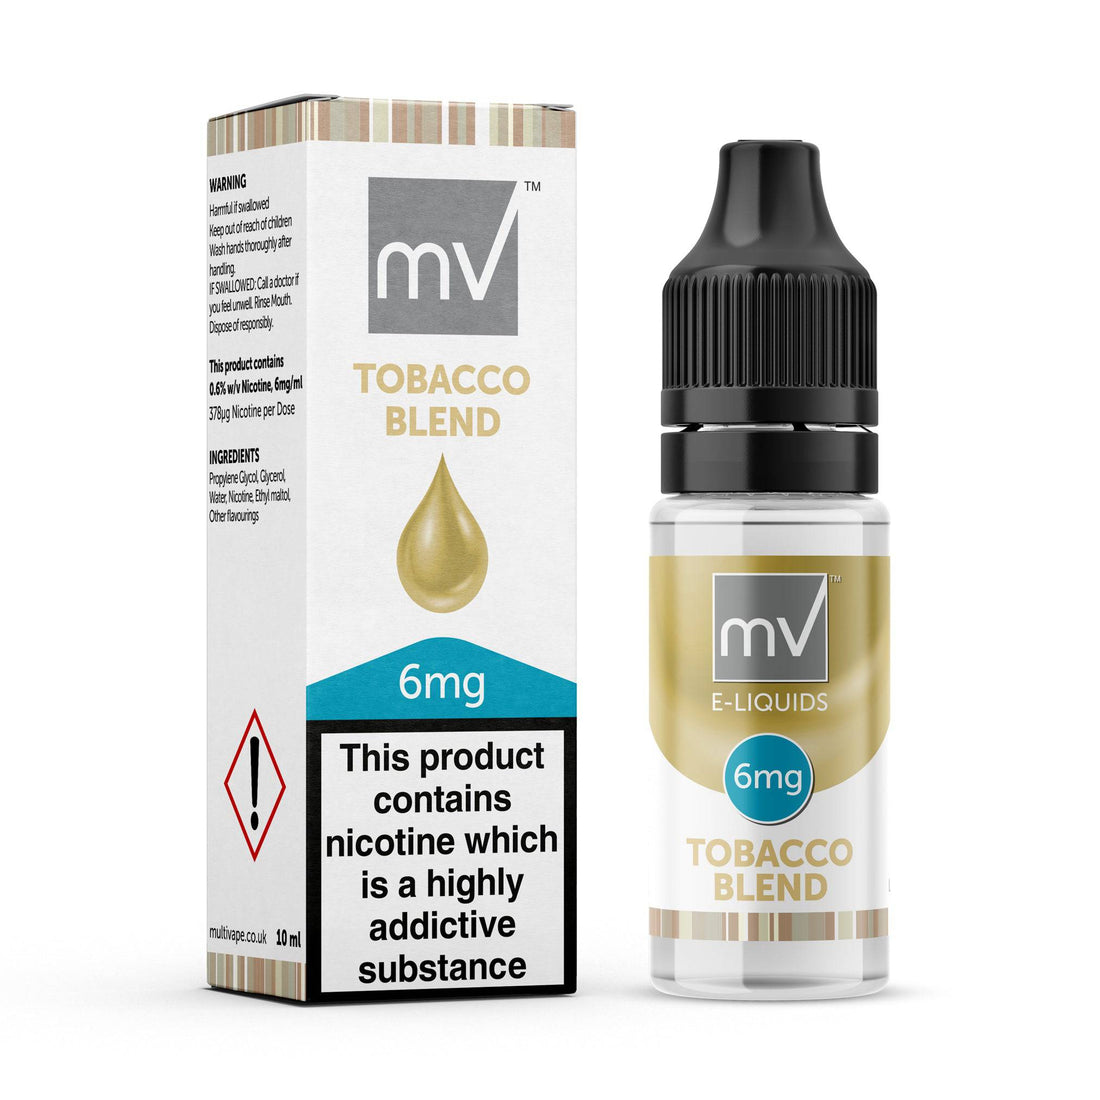 MV Tobacco Blend E-Liquid - multiVAPE